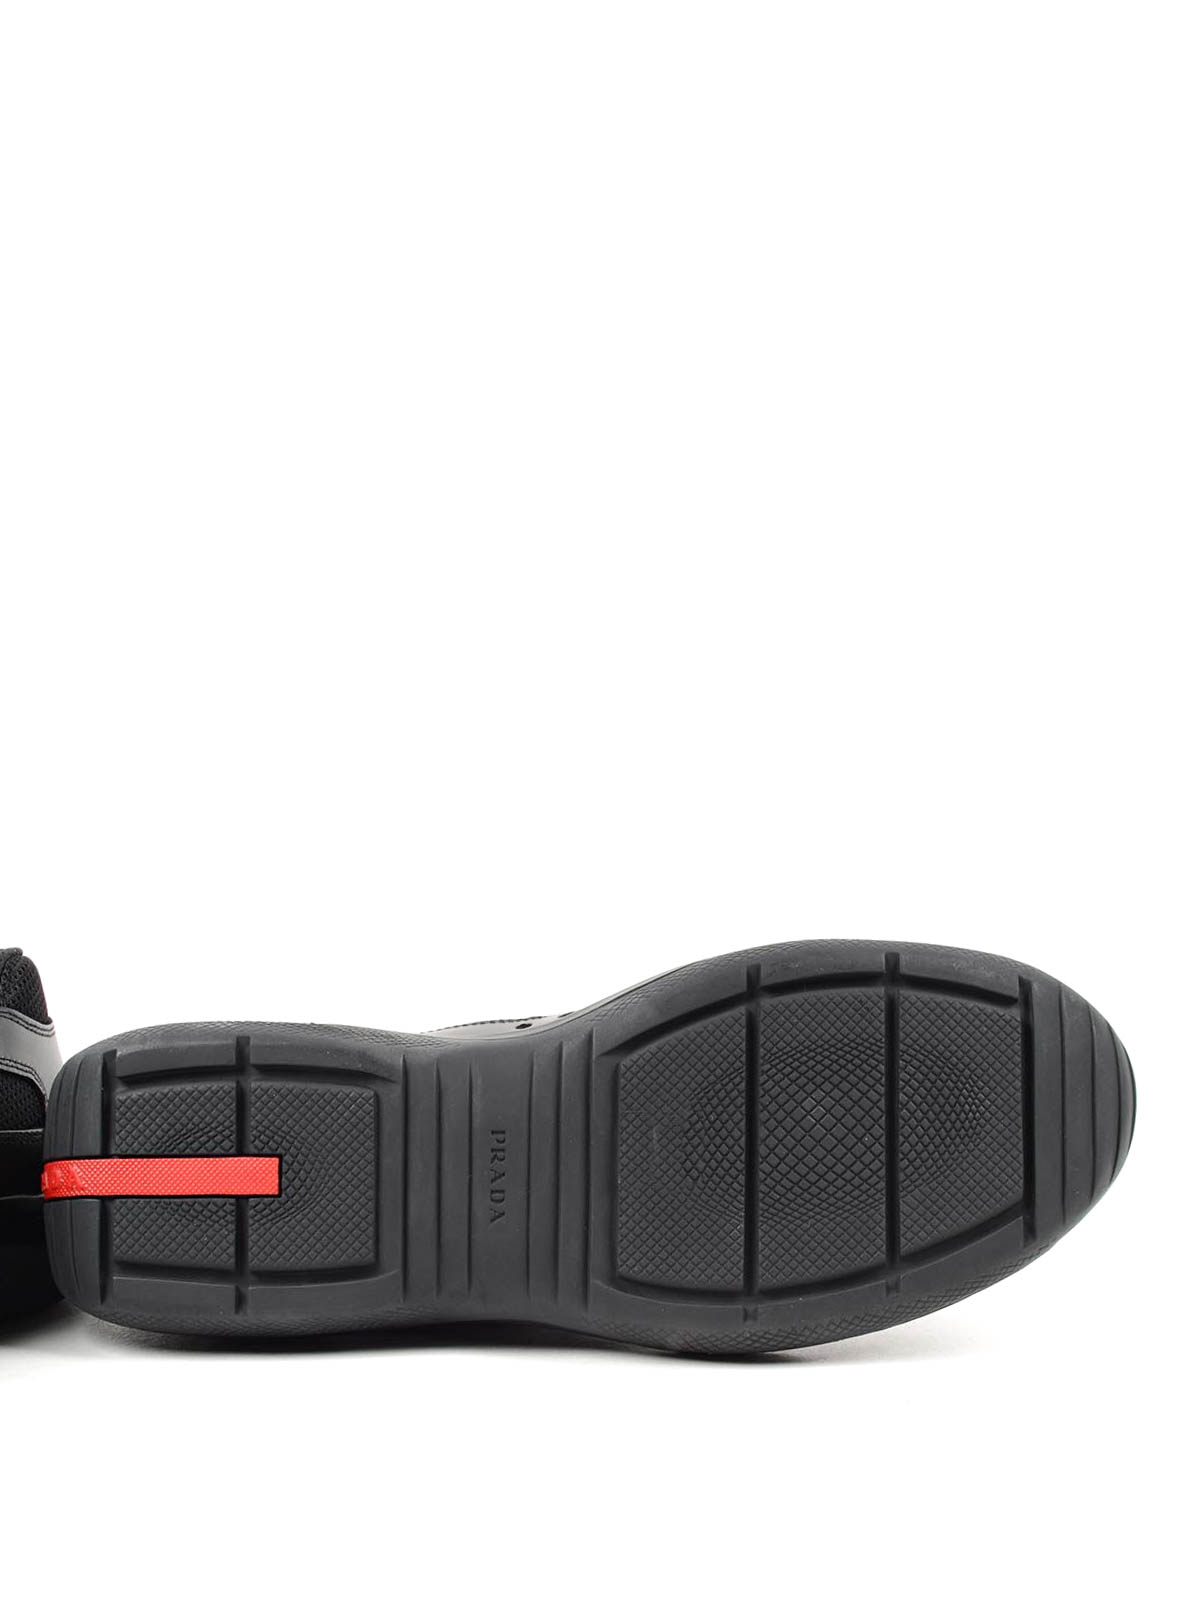 Buiten adem aanpassen Haan スニーカー Prada Linea Rossa - Leather and nylon sneakers - 4E2043O0VF0002FZFT0